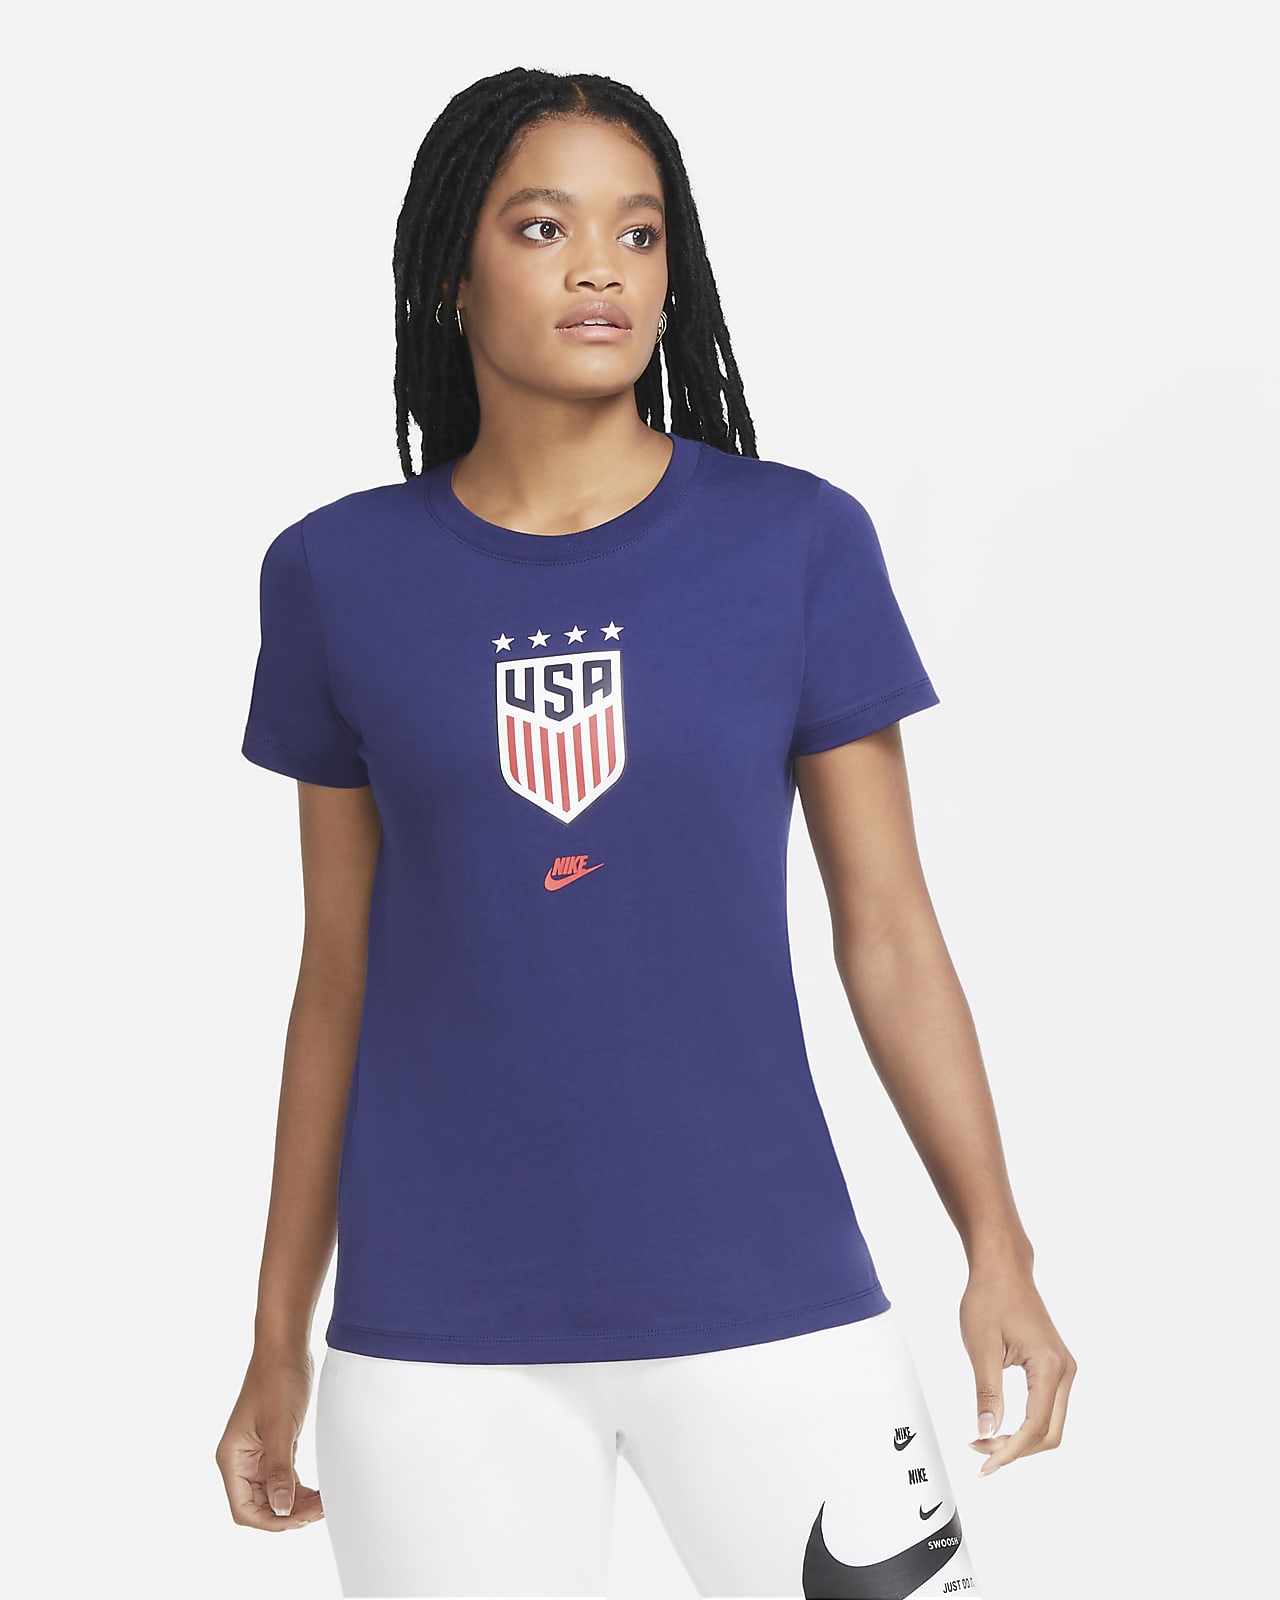 us women's soccer apparel nike